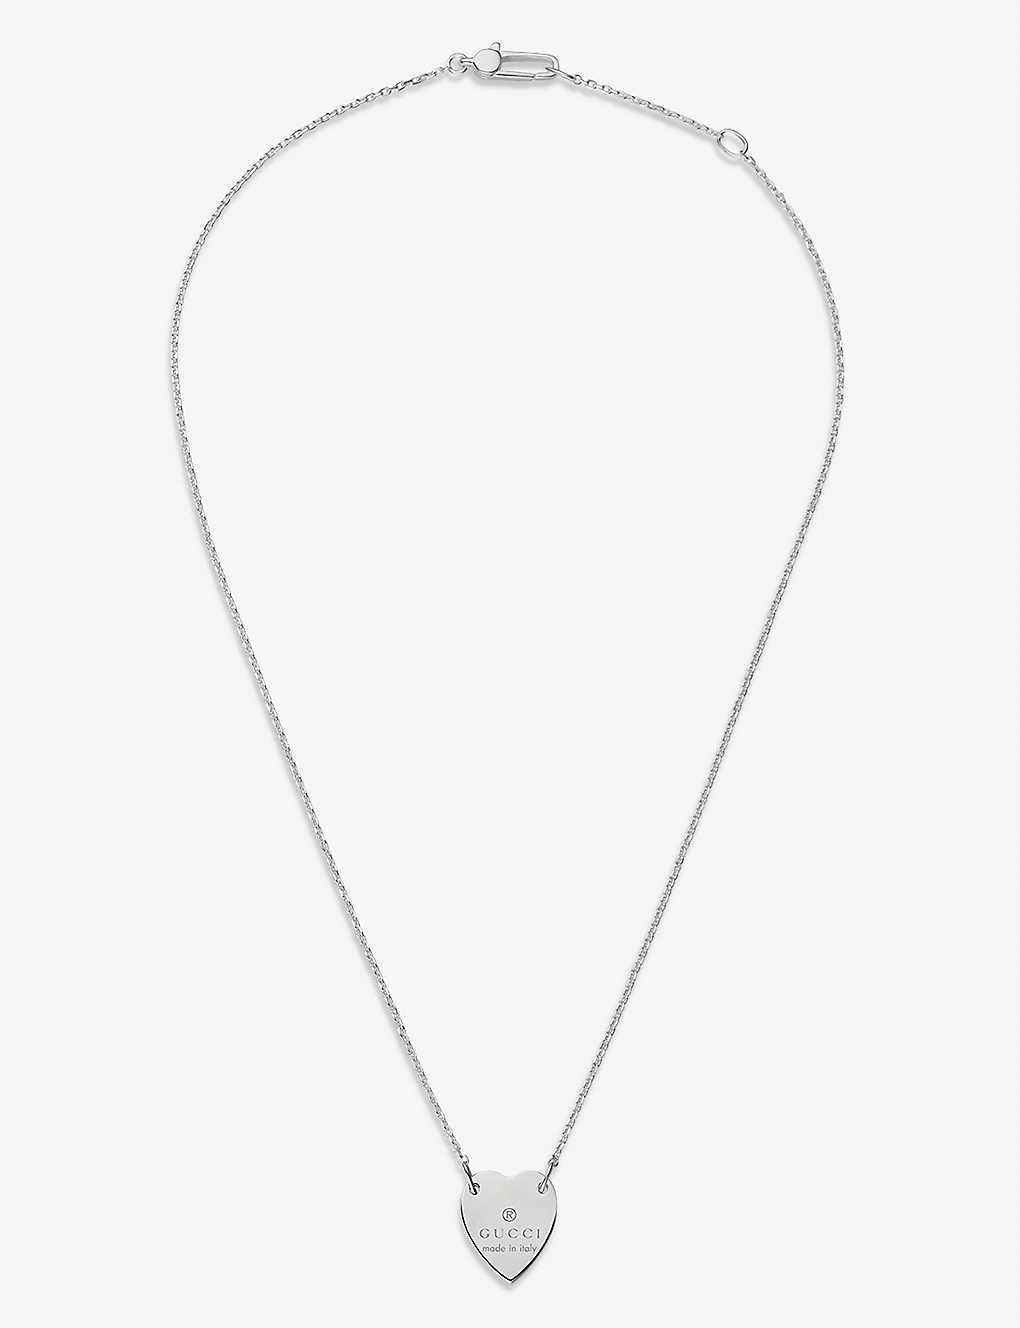 GUCCI - Trademark sterling silver heart pendant necklace 